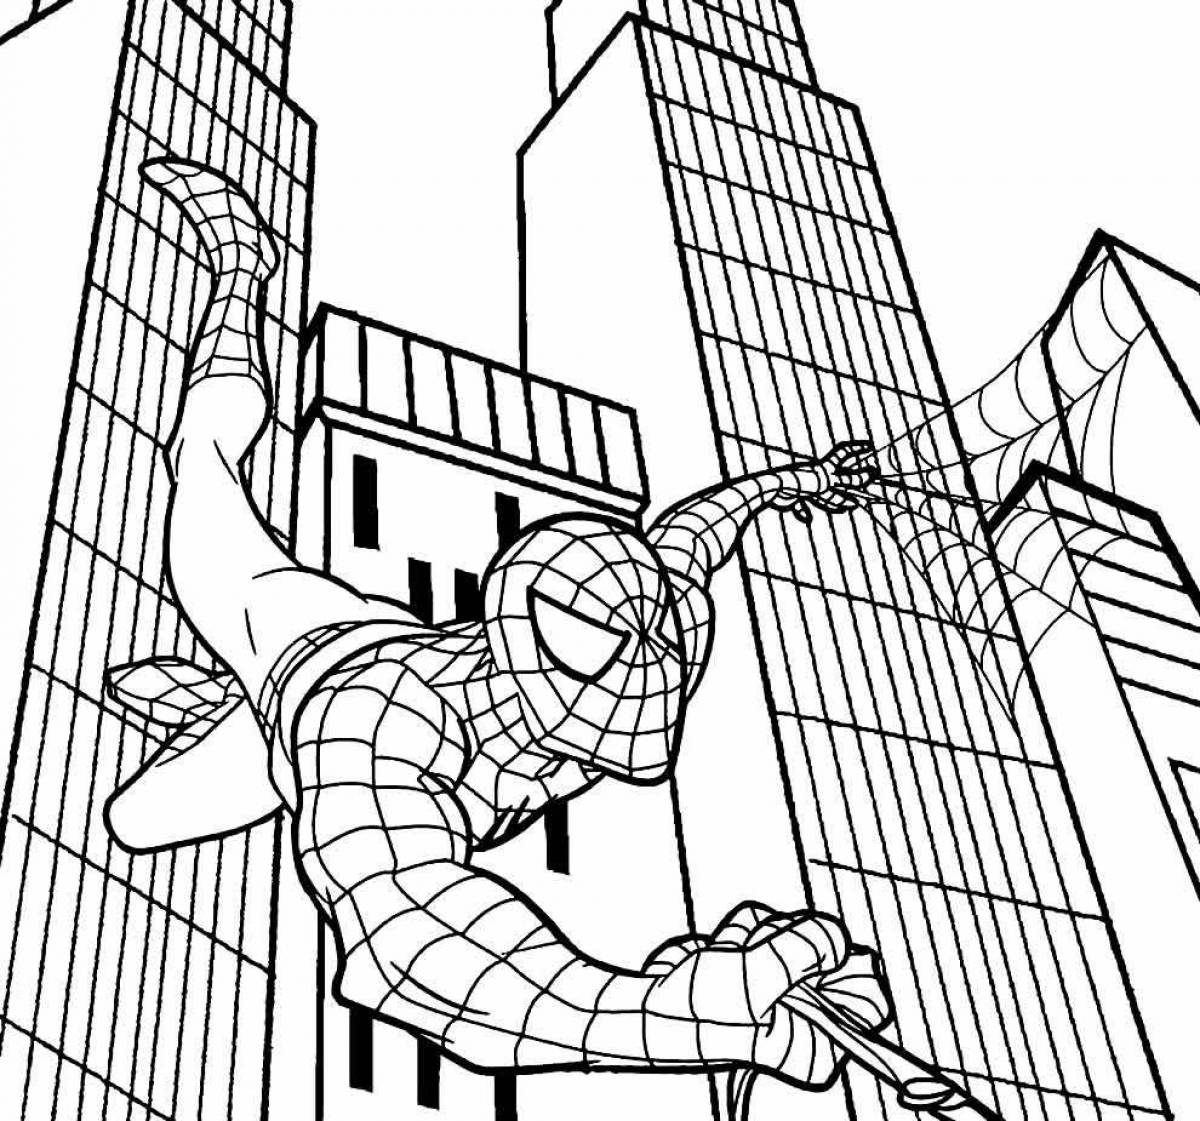 Coloring book playful comic spider-man